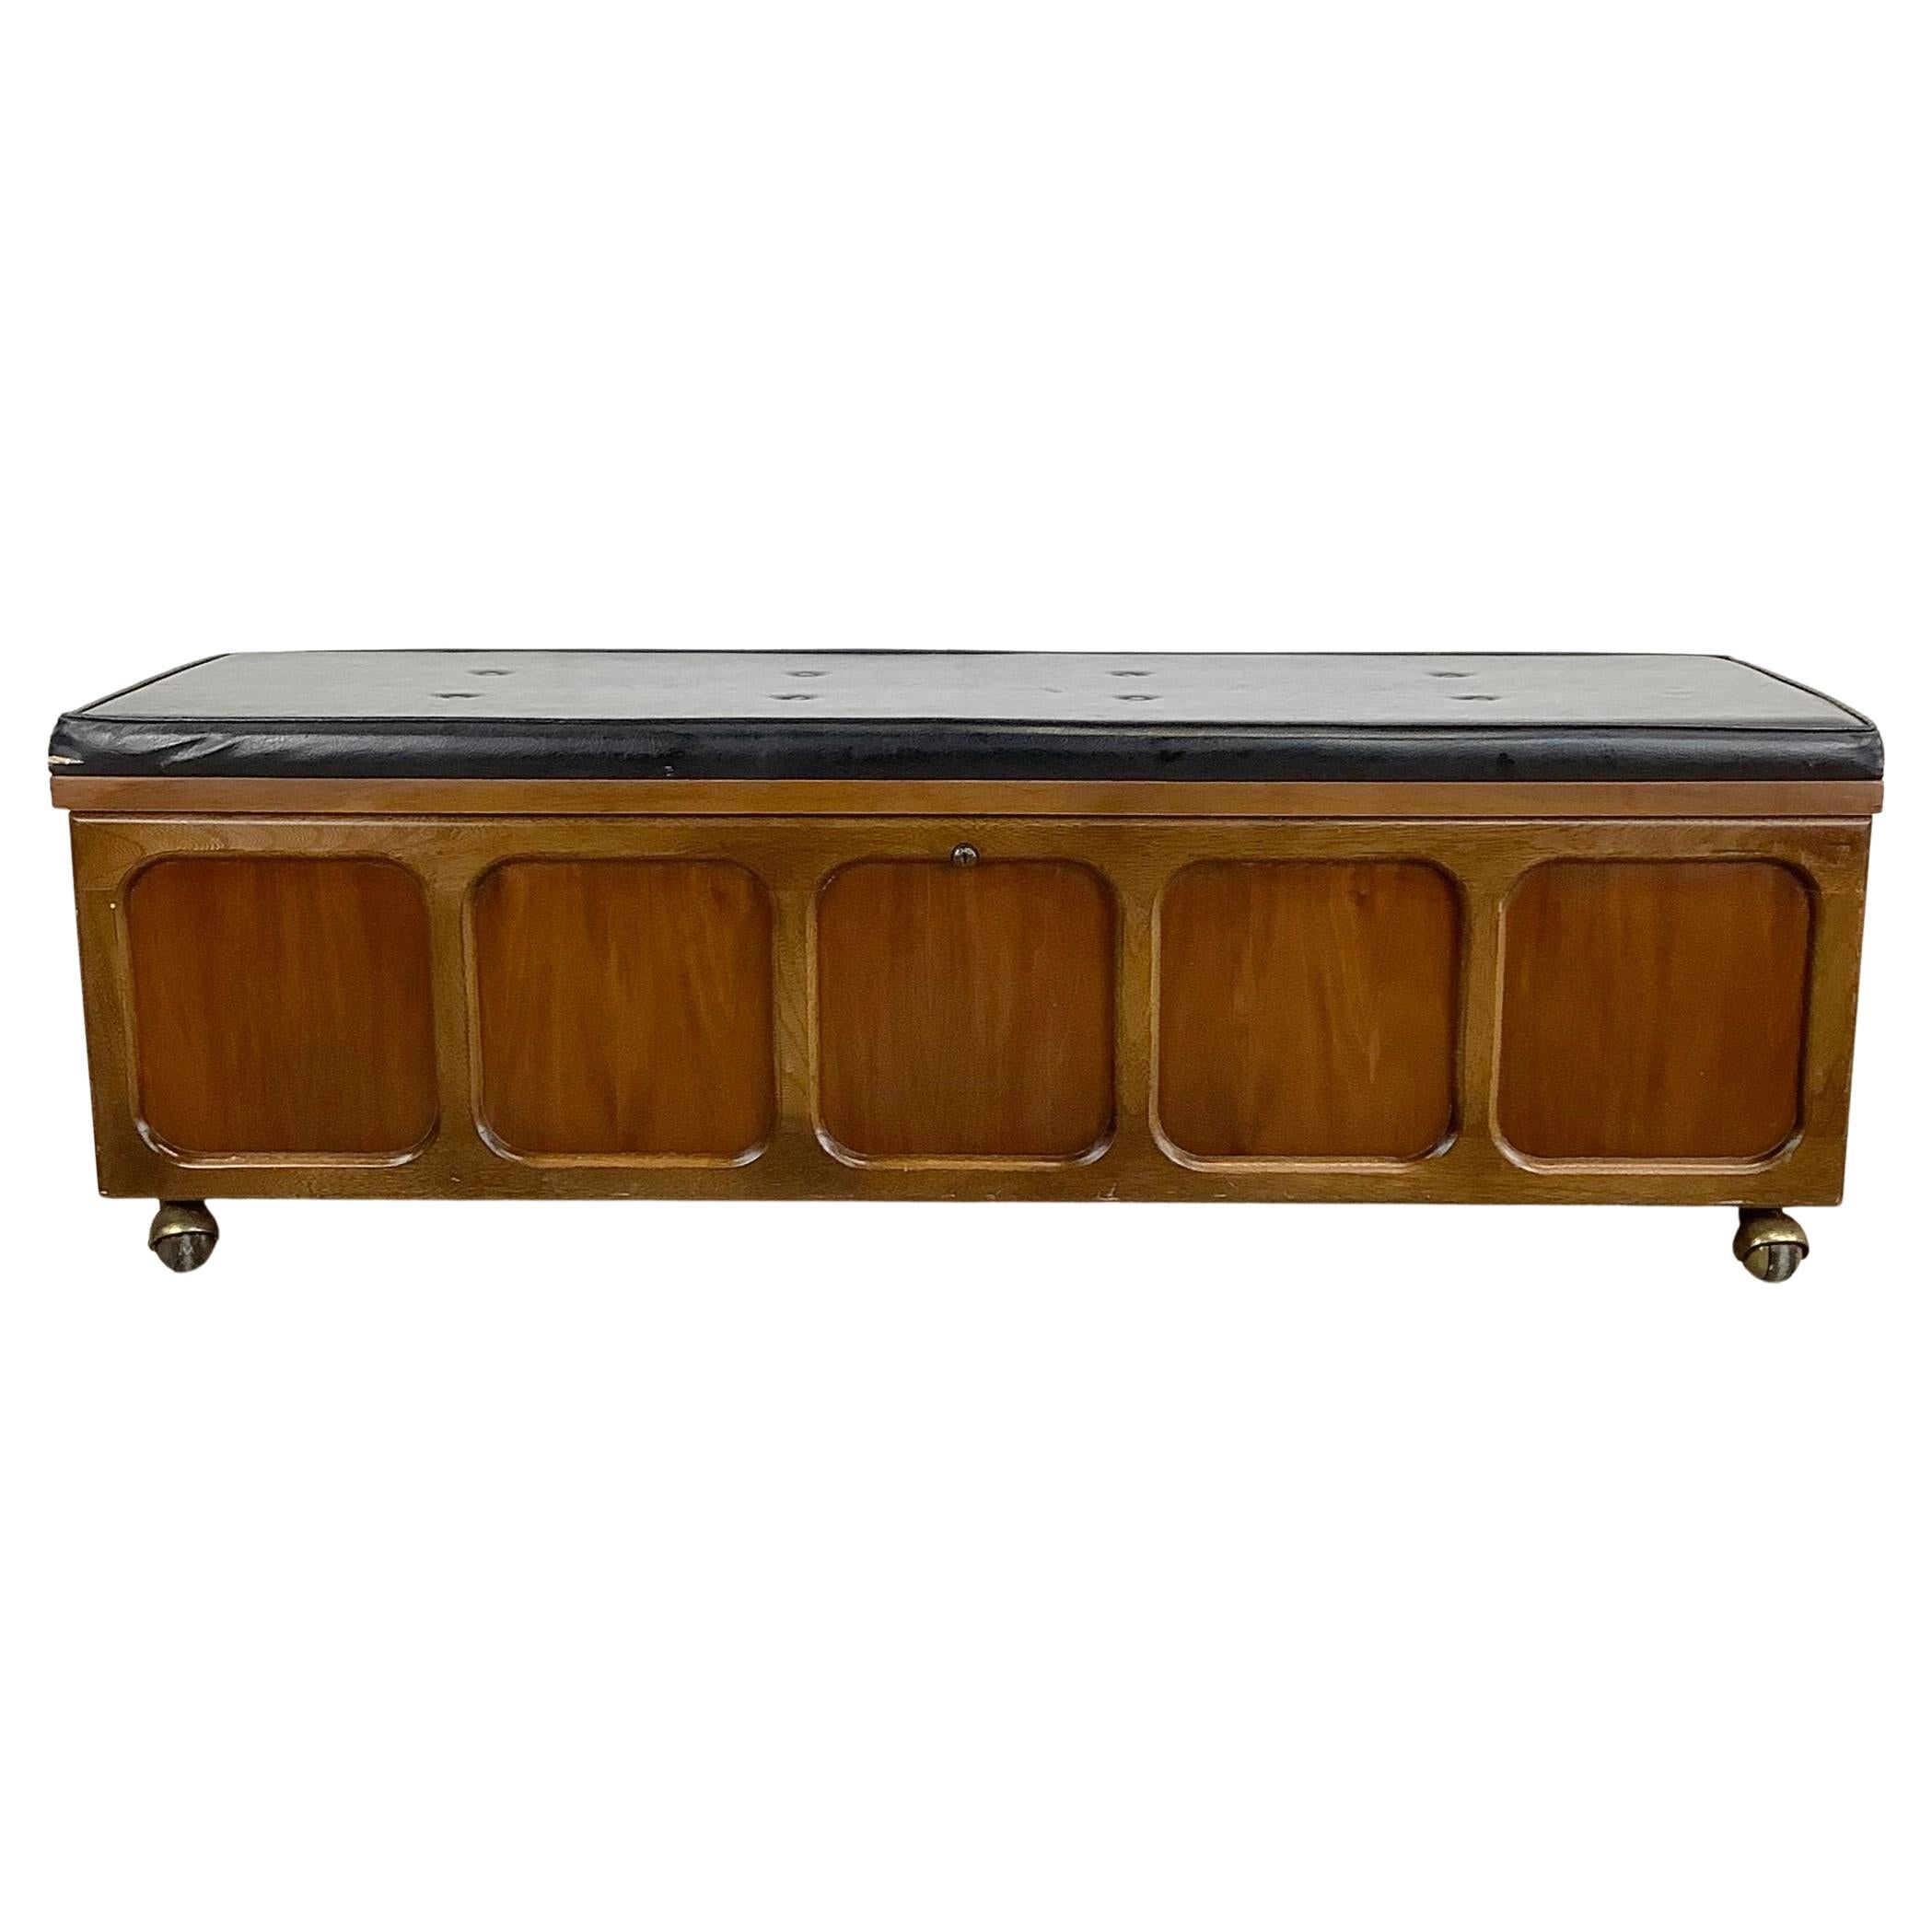 Midcentury Cedar Storage Bench from Lane Furniture